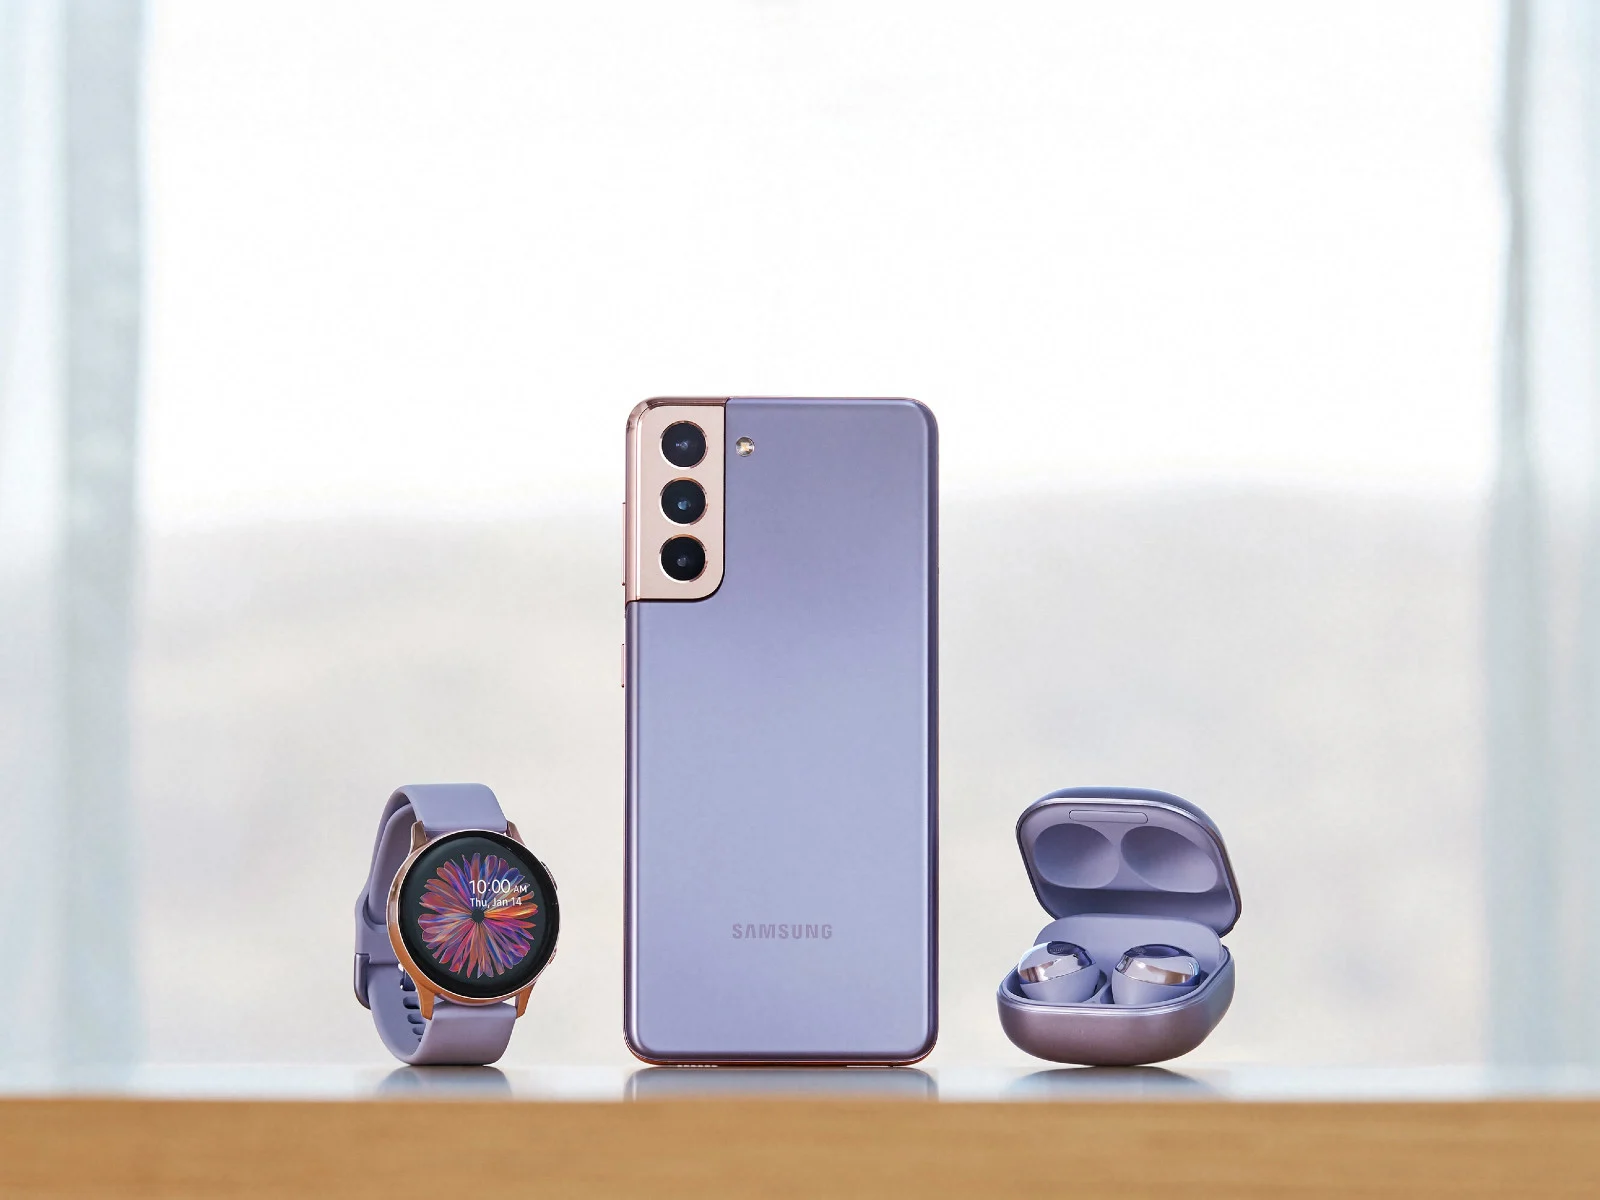 Samsung Galaxy S21 Plus, Galaxy Watch and Galaxy Buds Pro